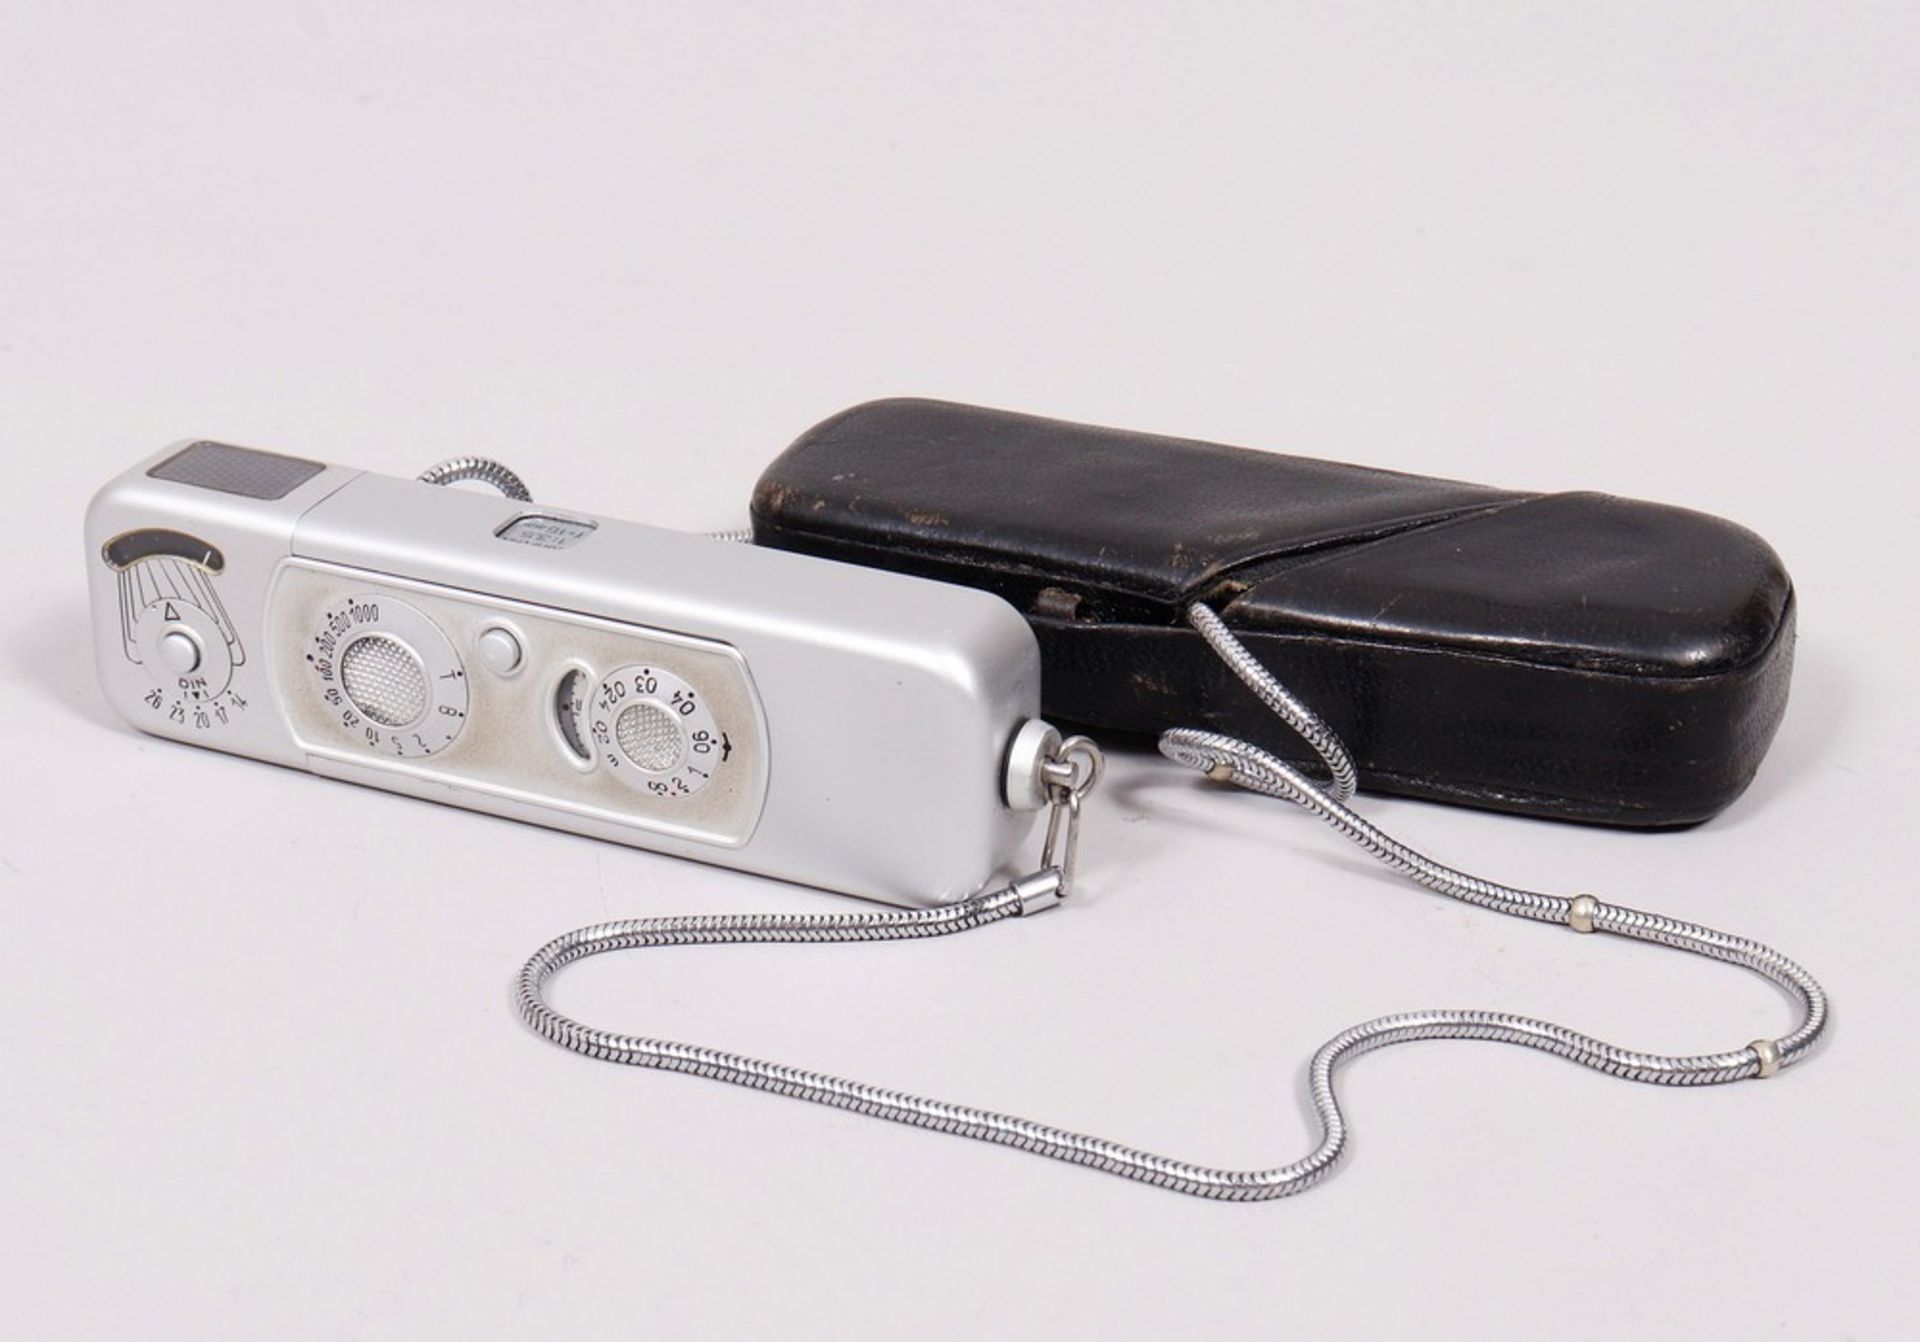 Miniature camera, Minox, around 1963/64